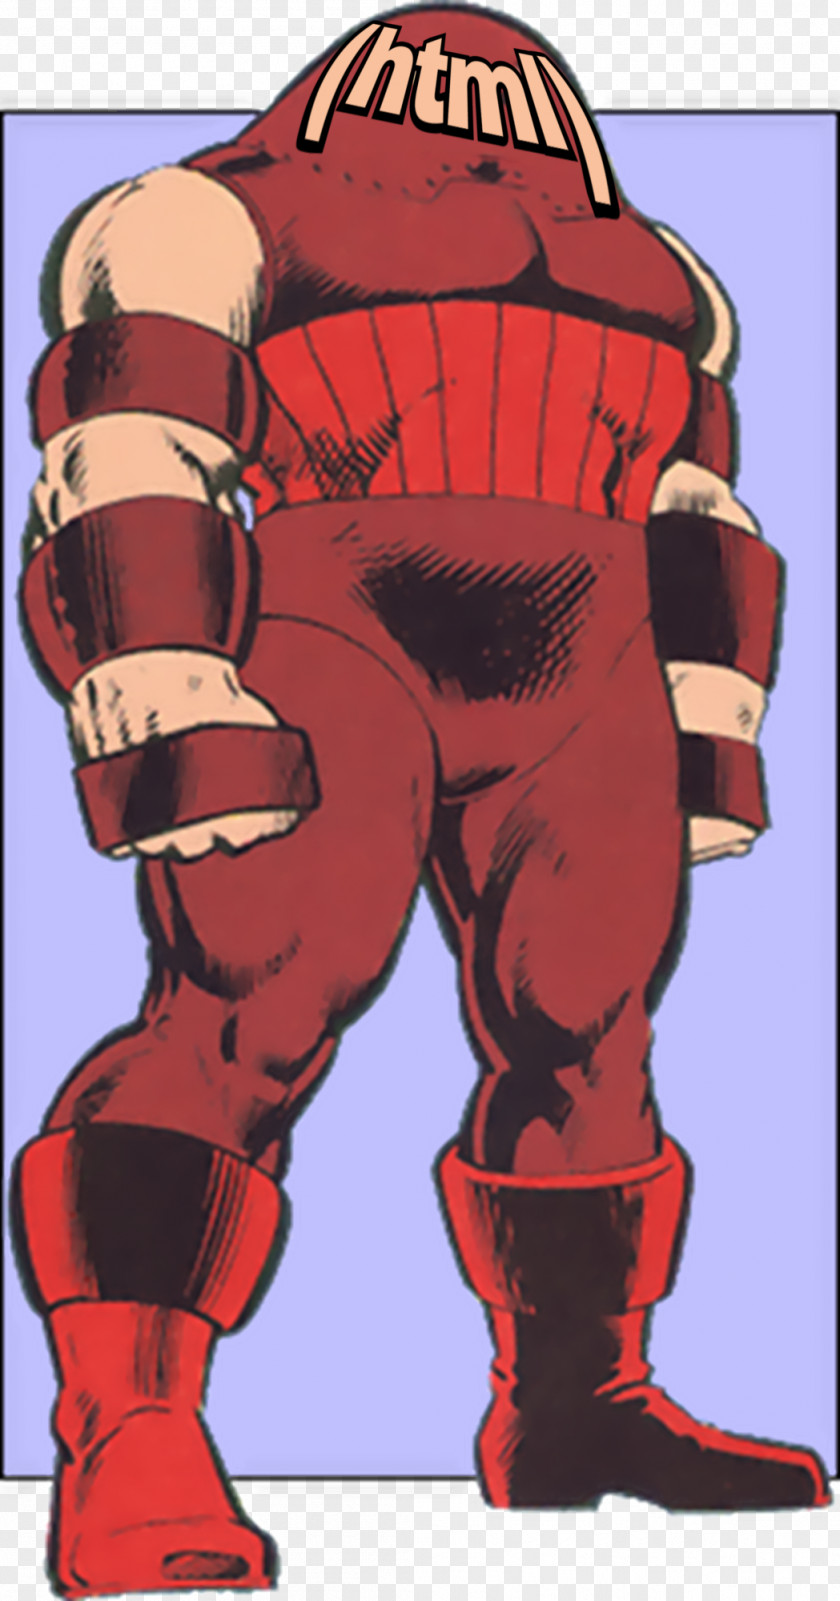 Storm Juggernaut Professor X Wolverine Colossus PNG